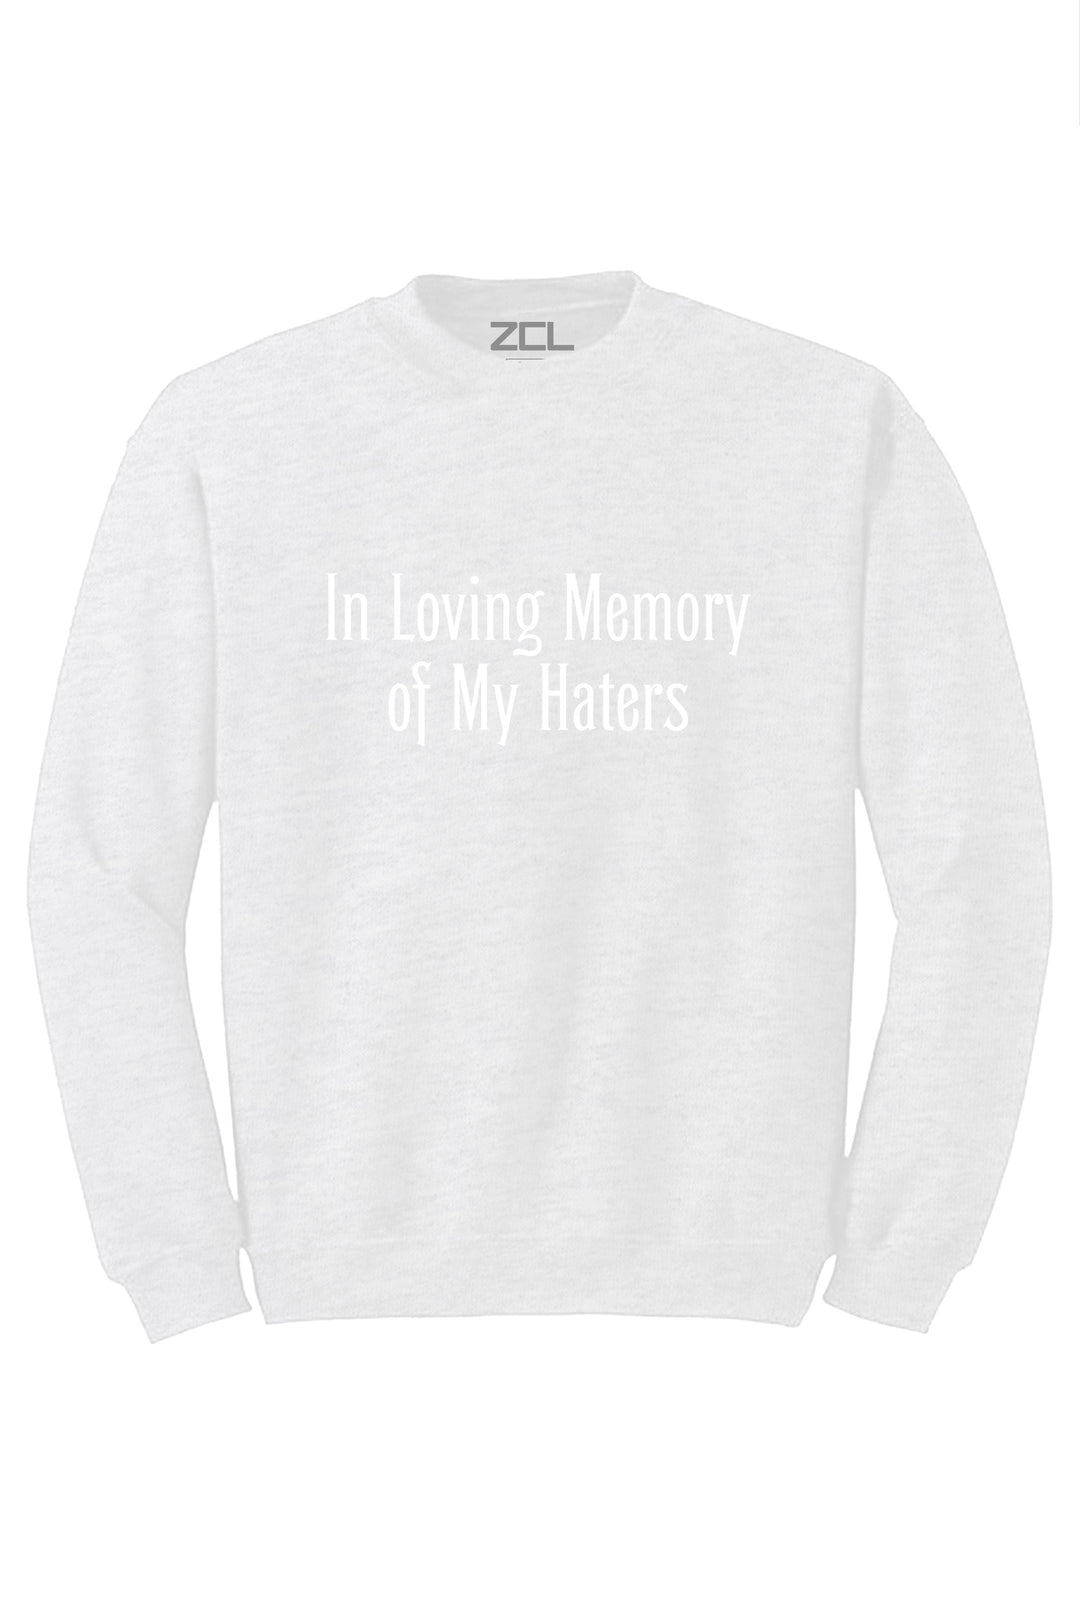 In Memory Crewneck Sweatshirt (White Logo) - Zamage